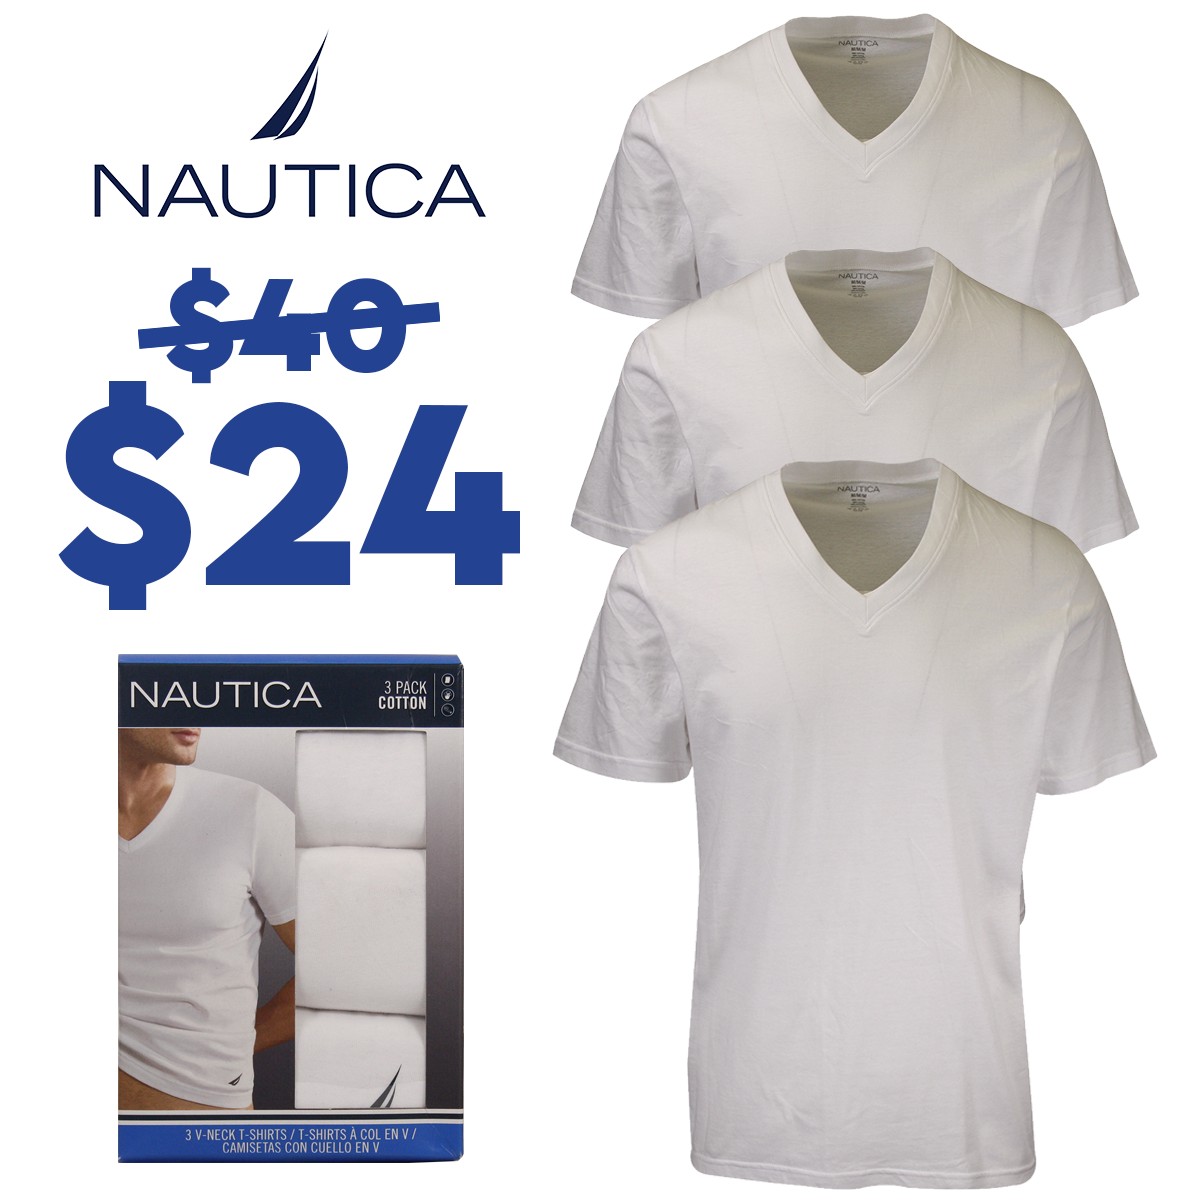 Nautica Men's 3 Pack White V-Neck S/S Tee